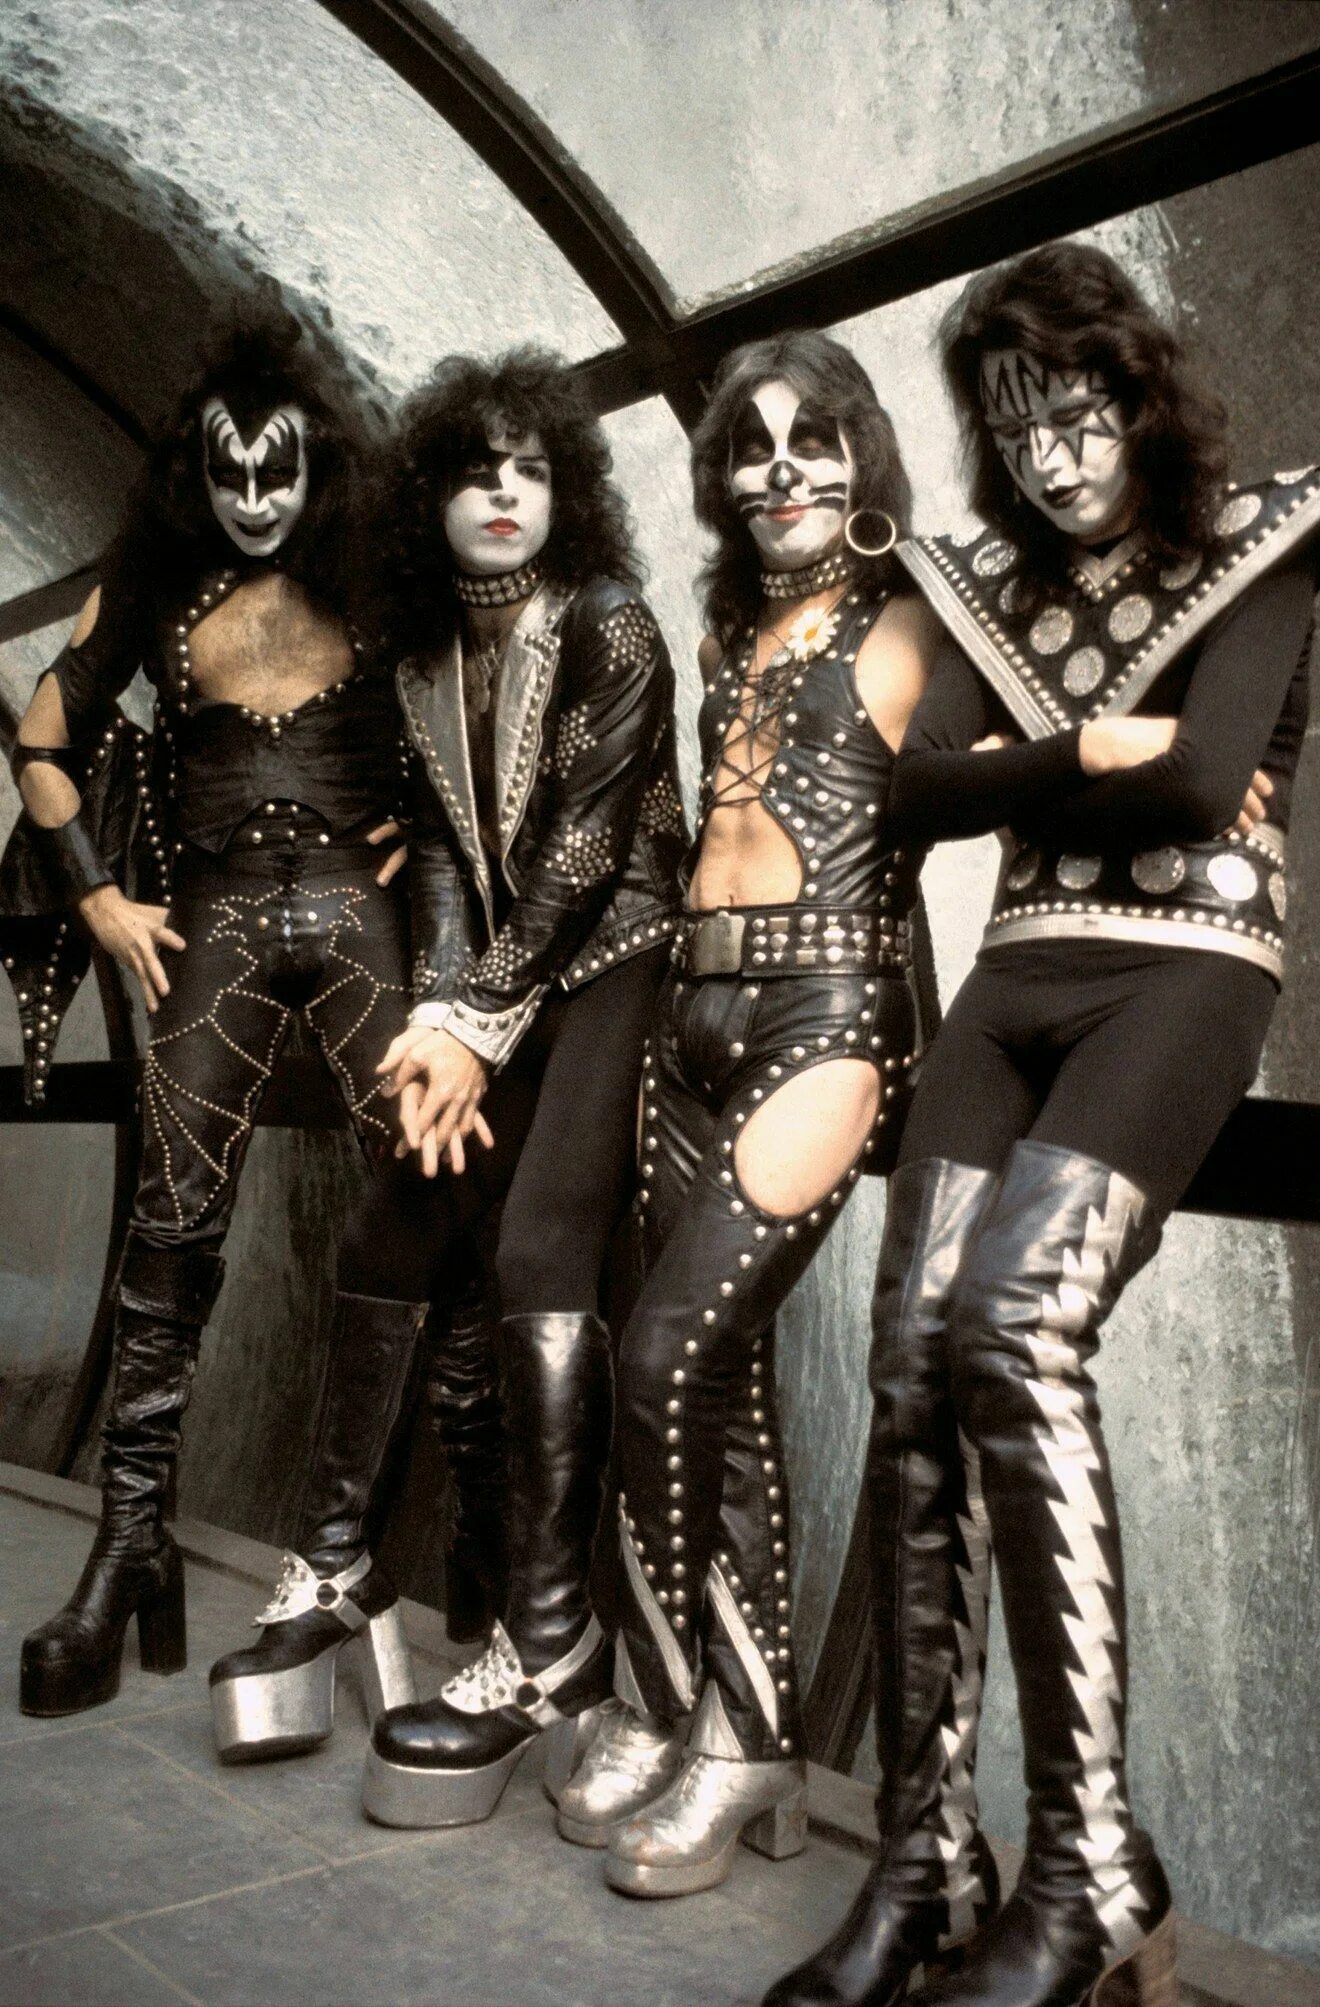 Группа Kiss. Группа Kiss 1973. Элис Купер группа Кисс. Группа Кисс в молодости. Зарубежный рок металл